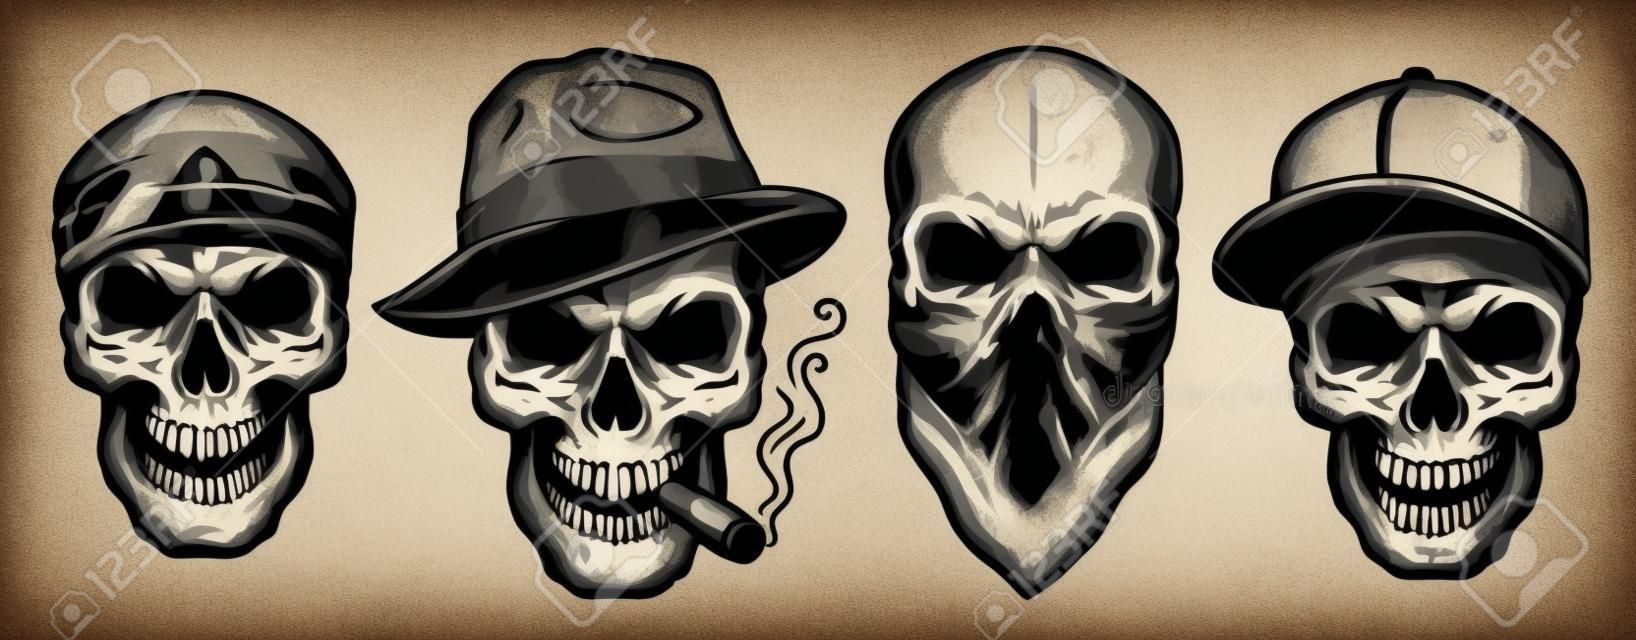 Skulls in monochrome vintage style, gangsters and mafia set. Vector illustration.